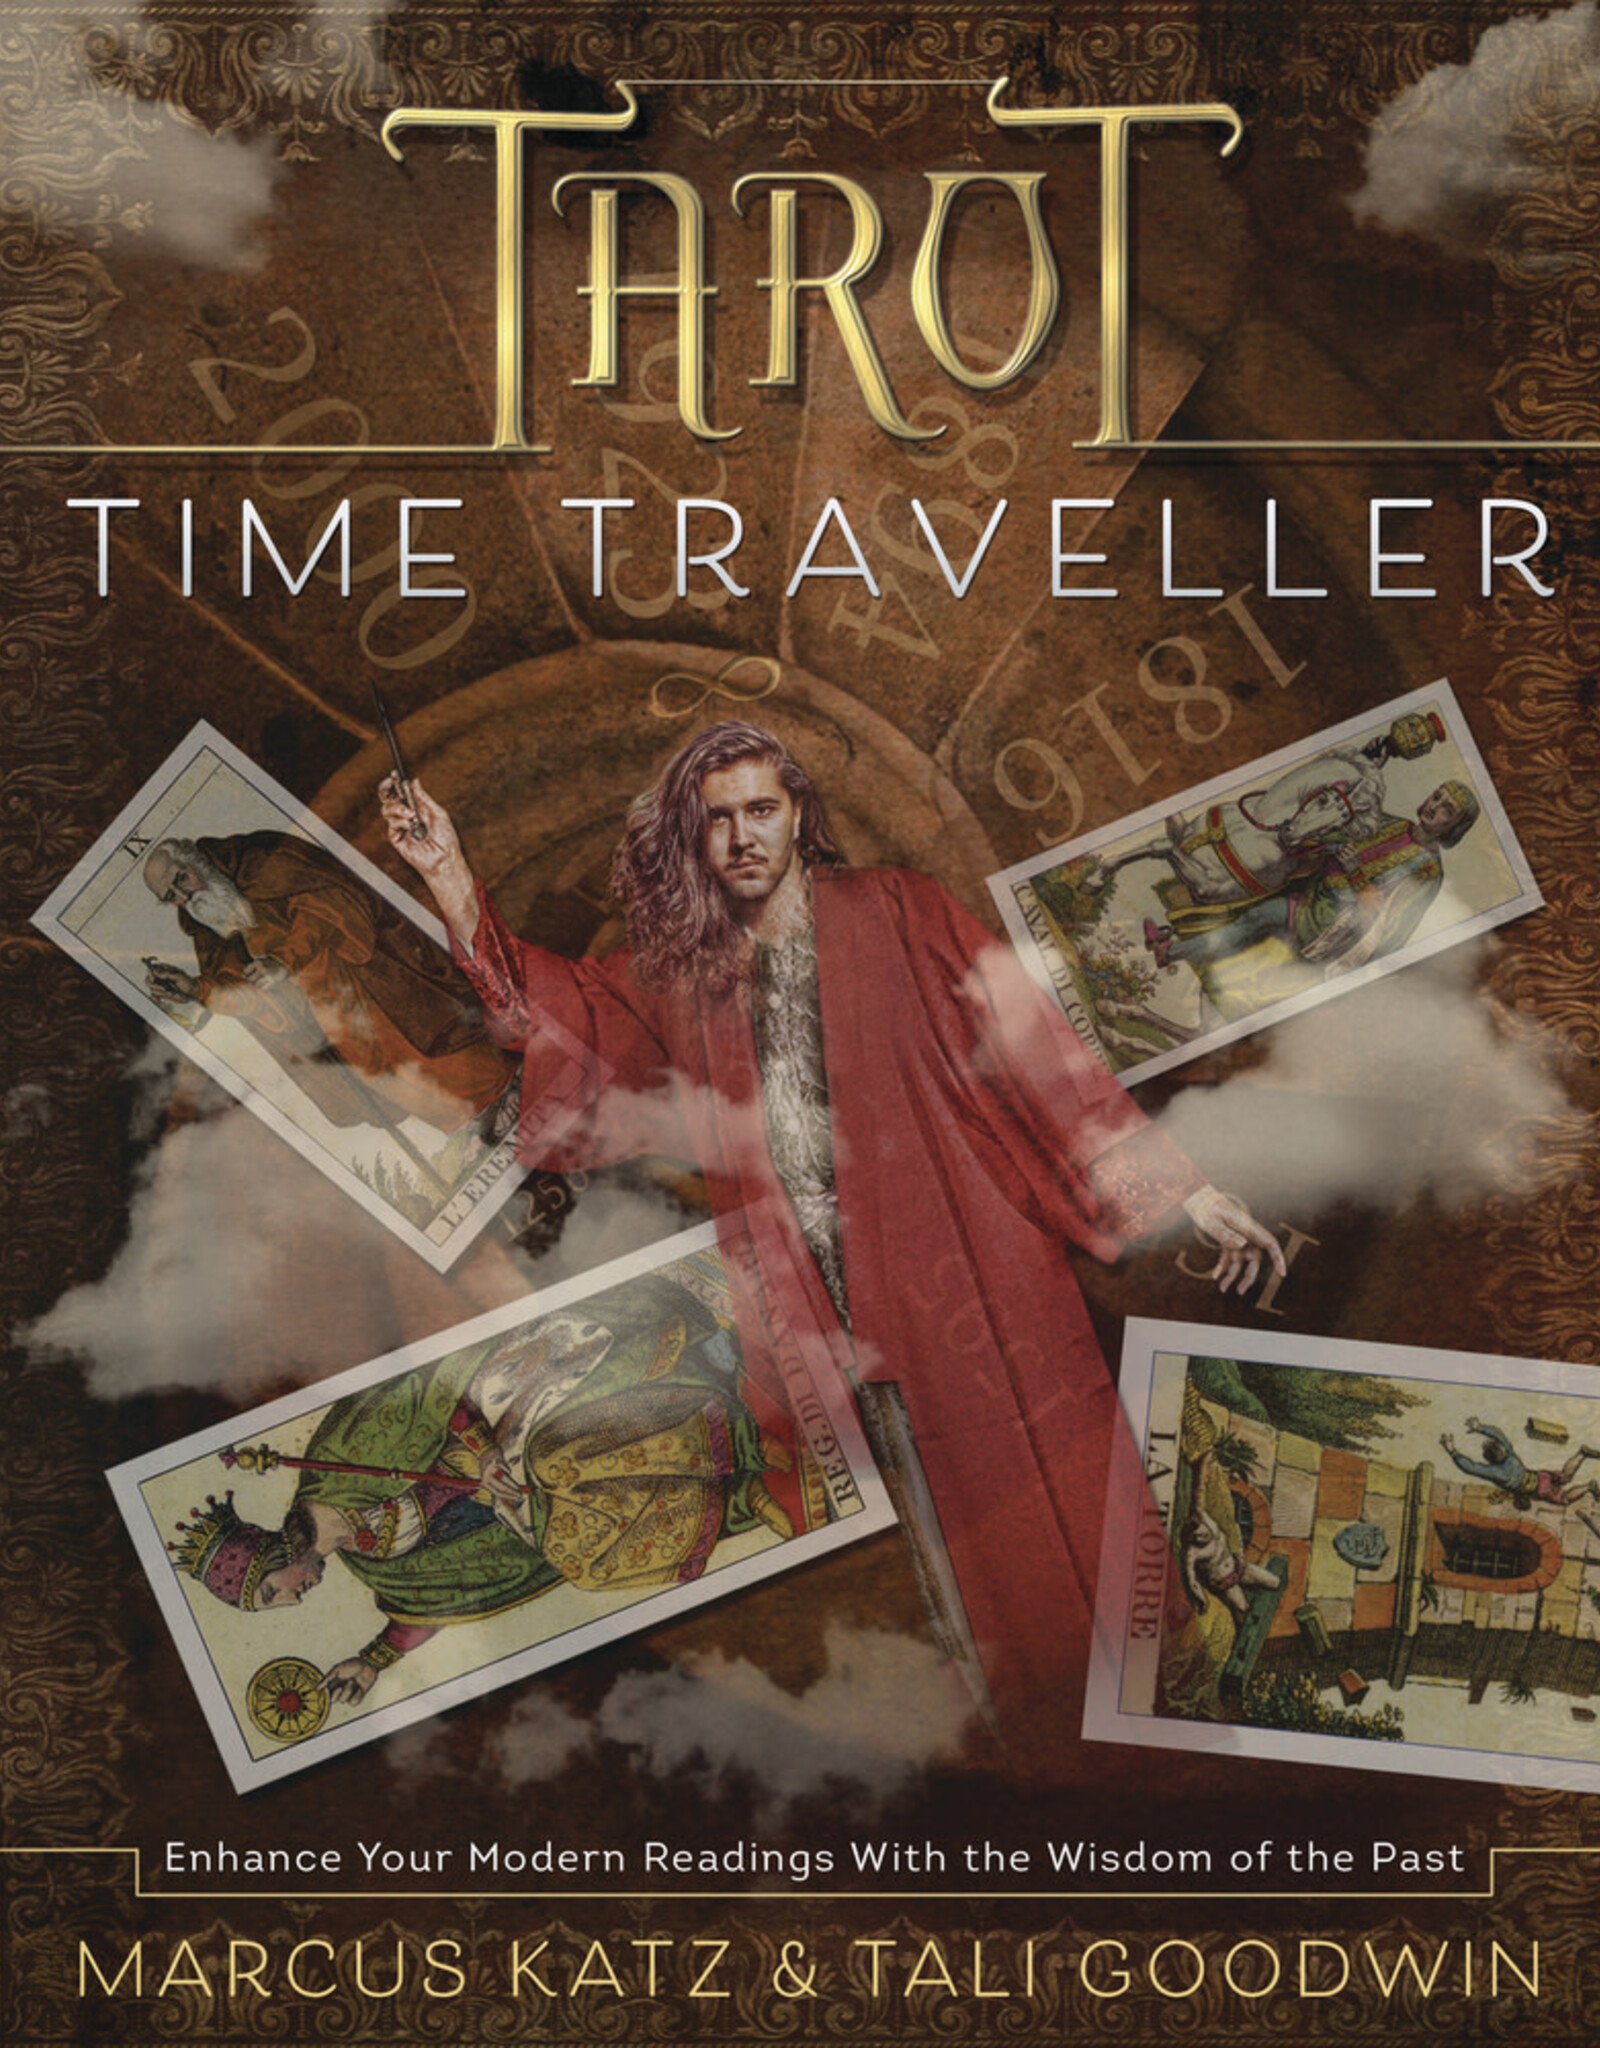 Tarot Time Traveller